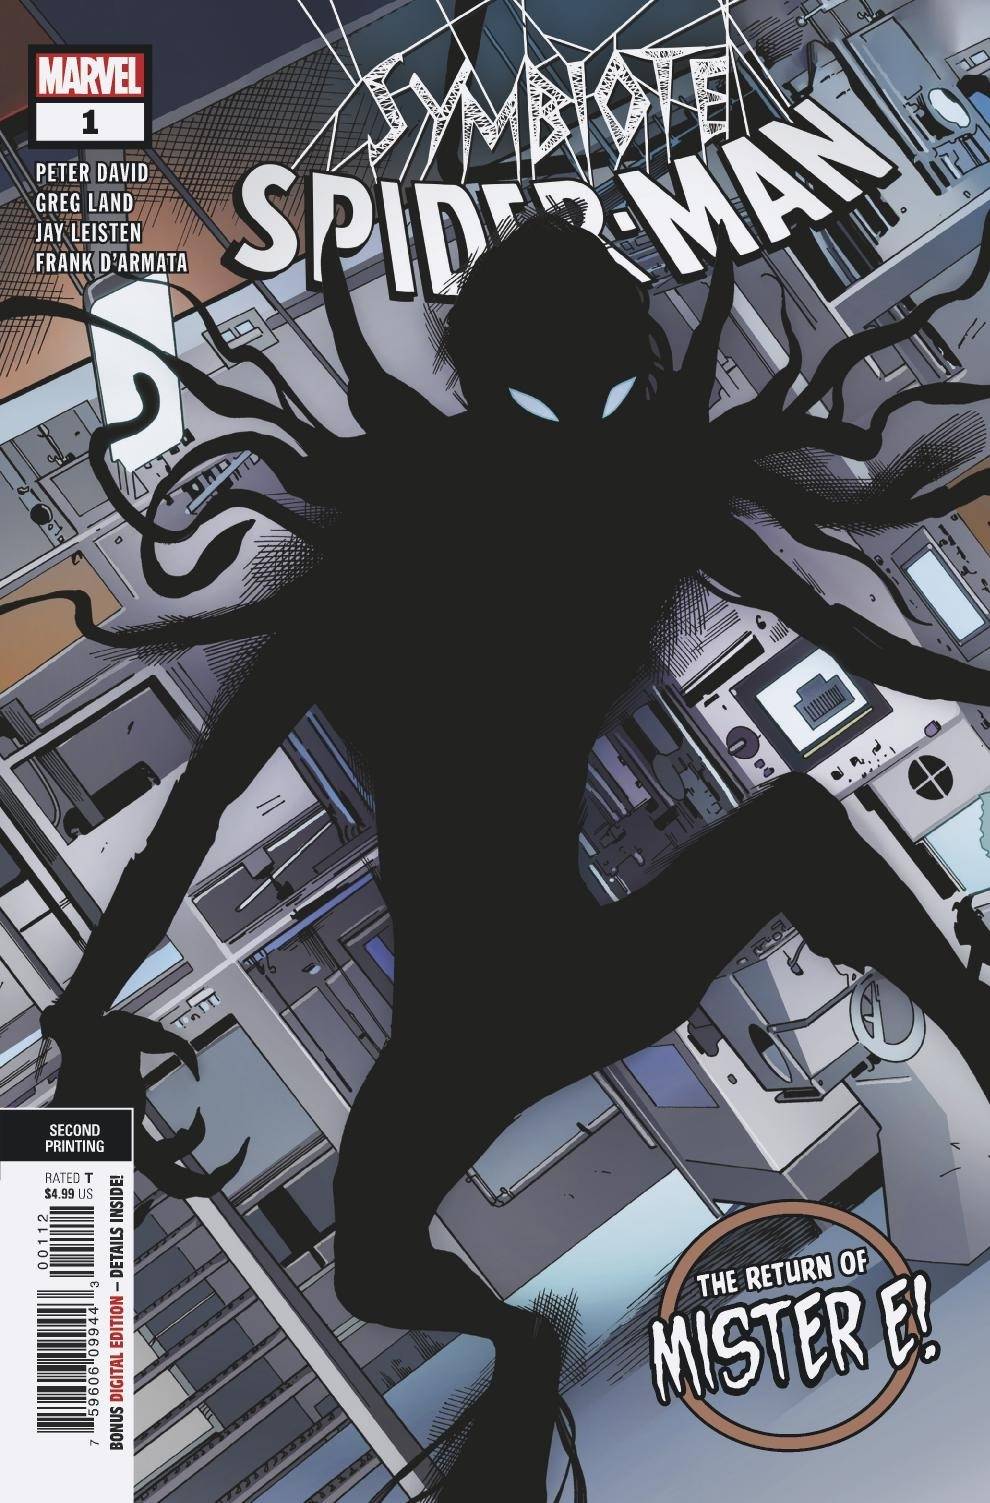 Symbiote Spider-Man King In Black #1 2nd Printing Variant (Of 5)